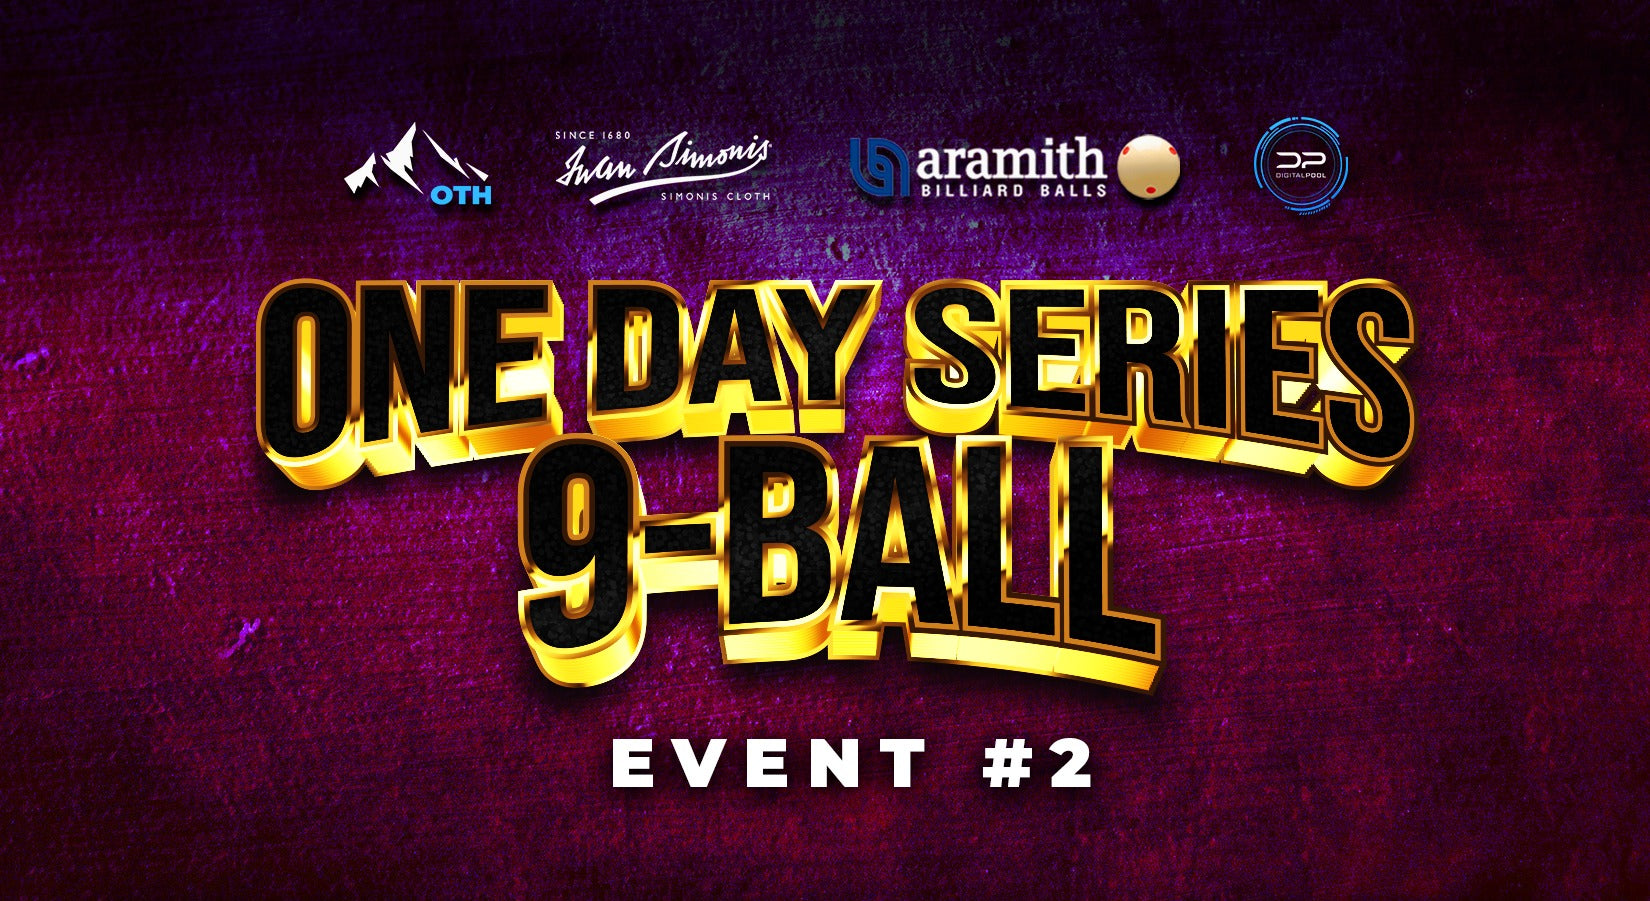 Jun 1 - One Day Open 9-Ball Series Event #2